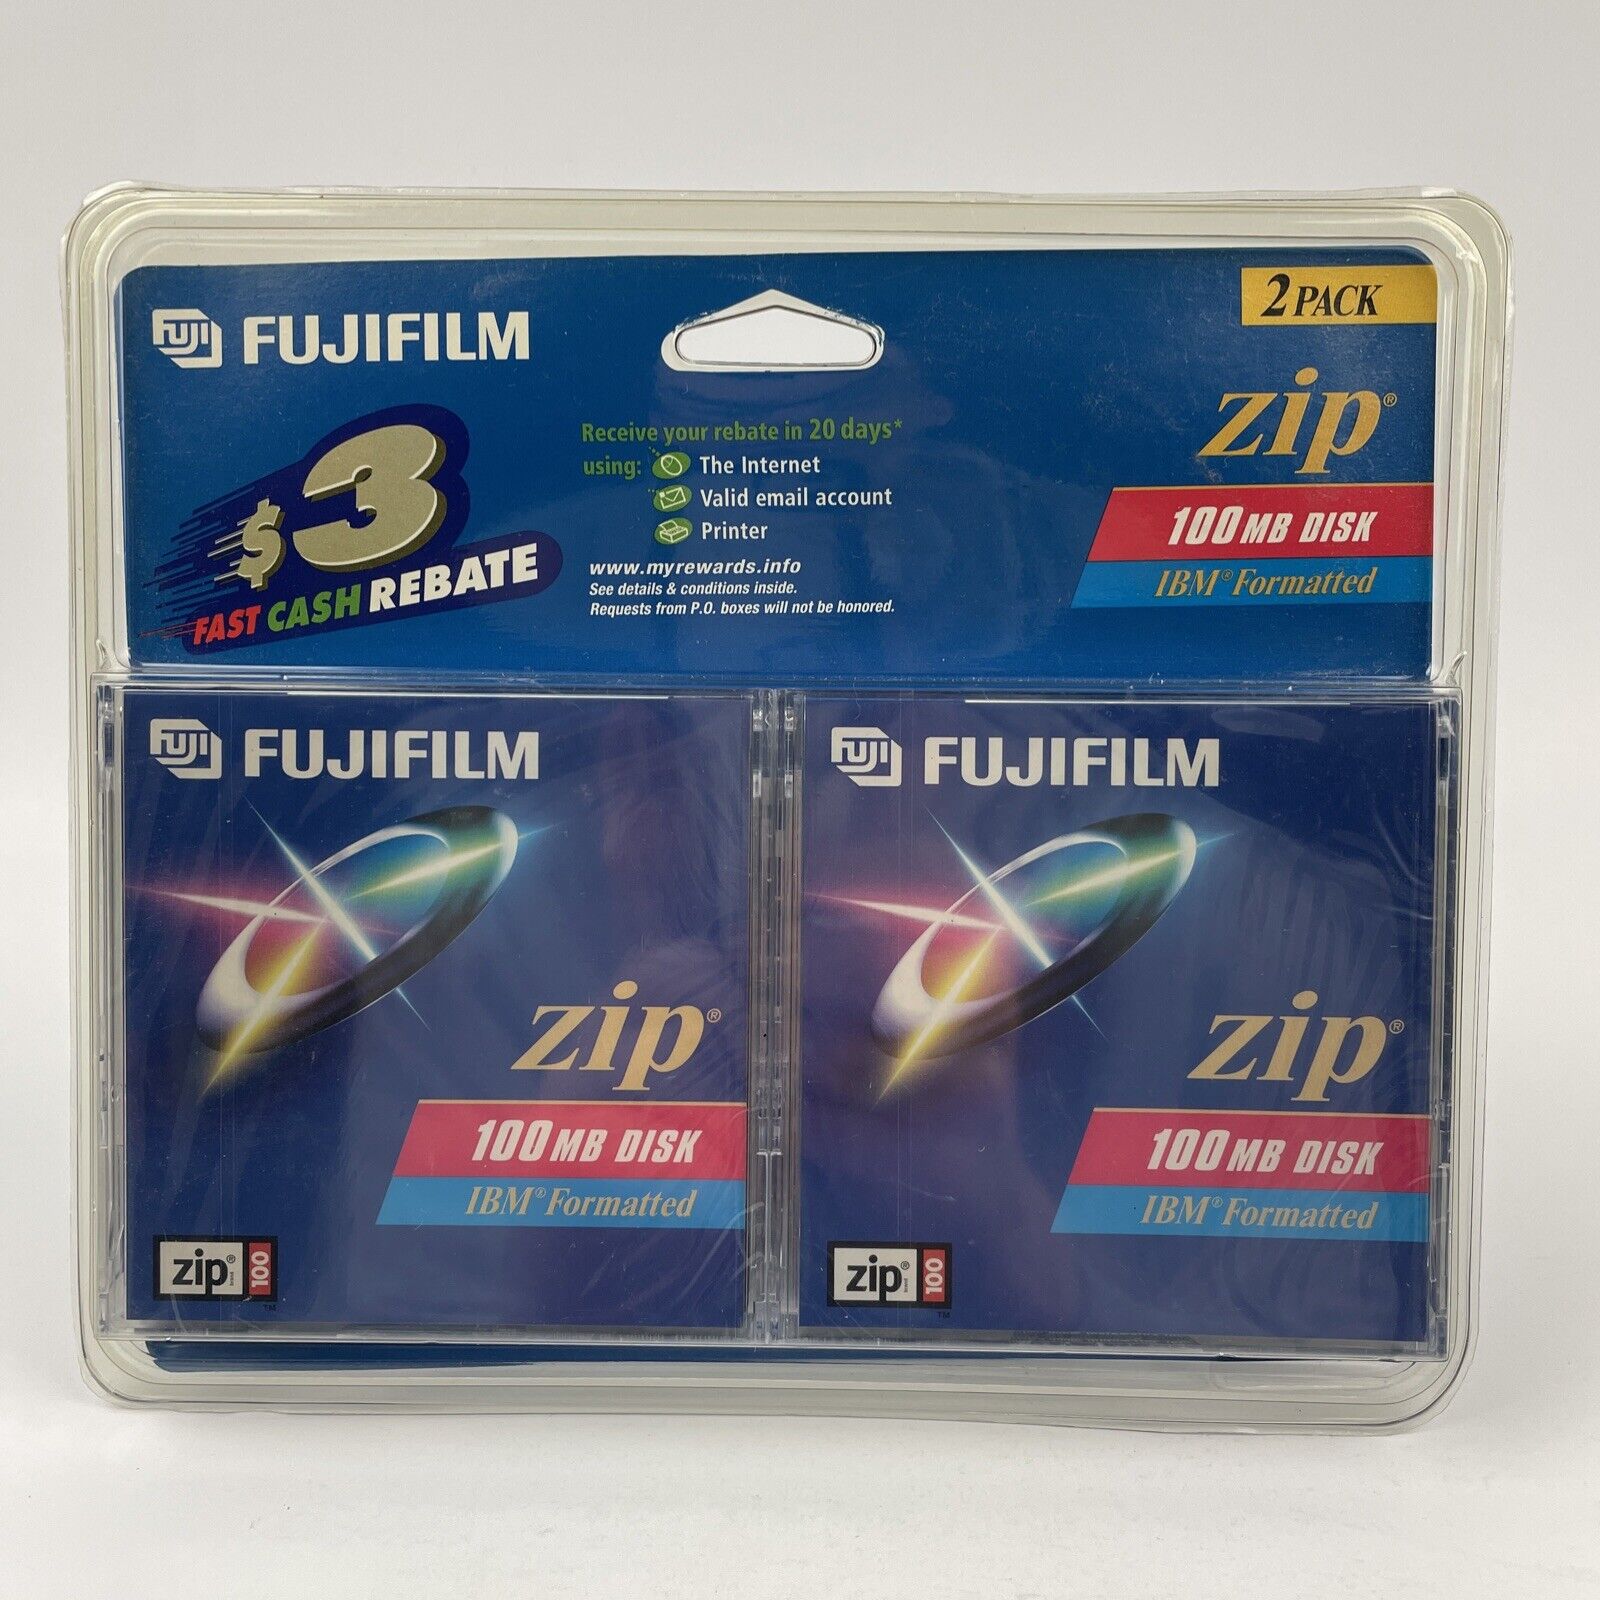 Fujifilm Zip 100mb Disk IBM Formatted 2 Pack Sealed